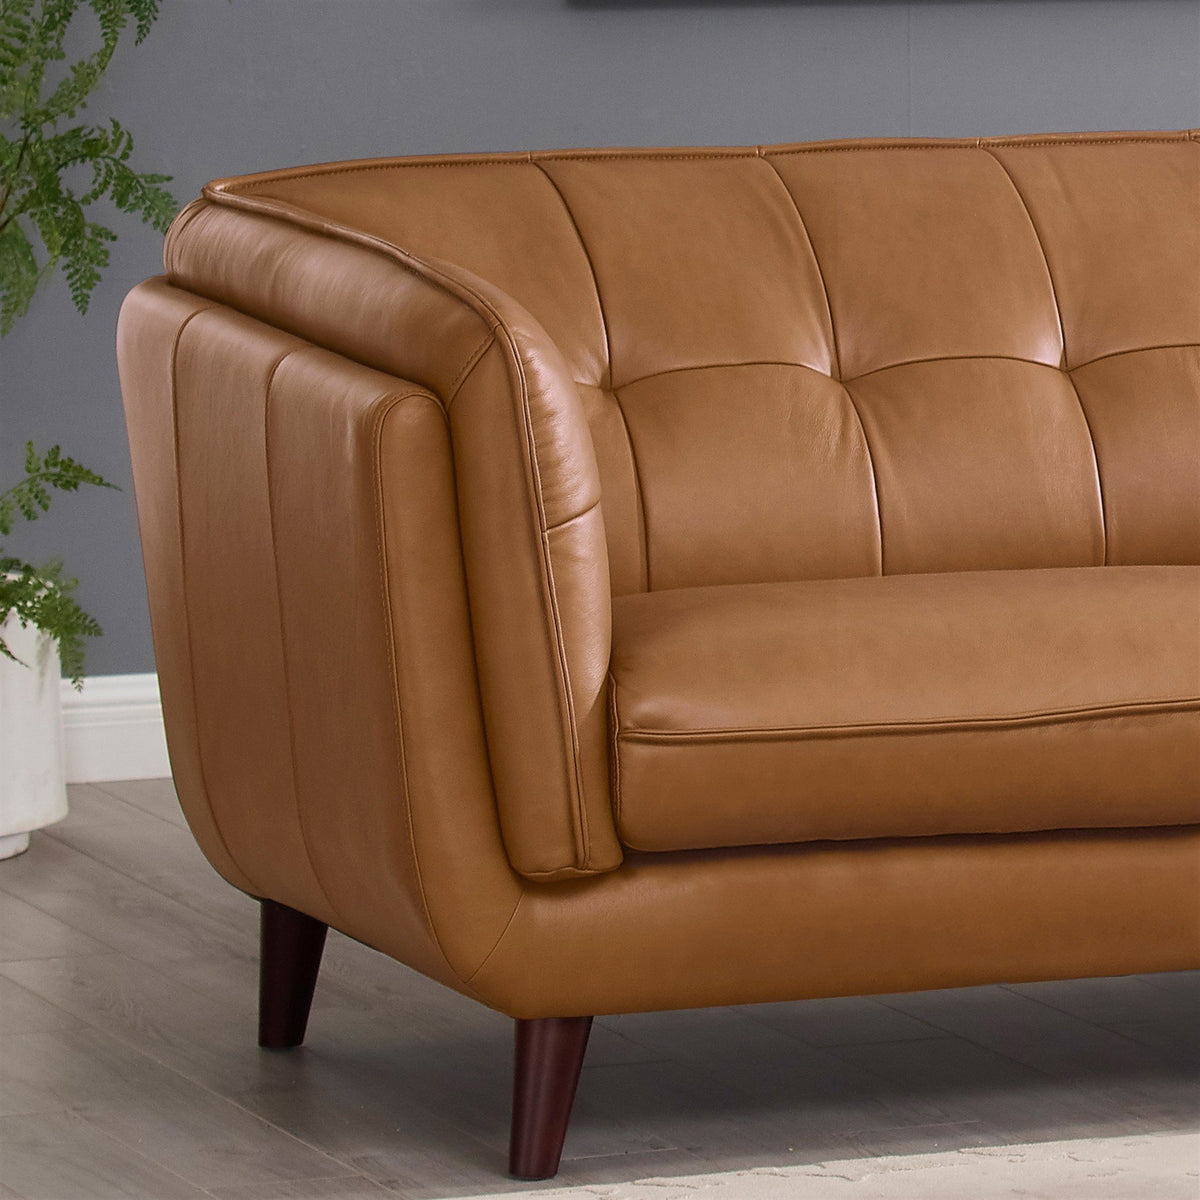 Seymour Cognac Leather Loveseat - MJM Furniture